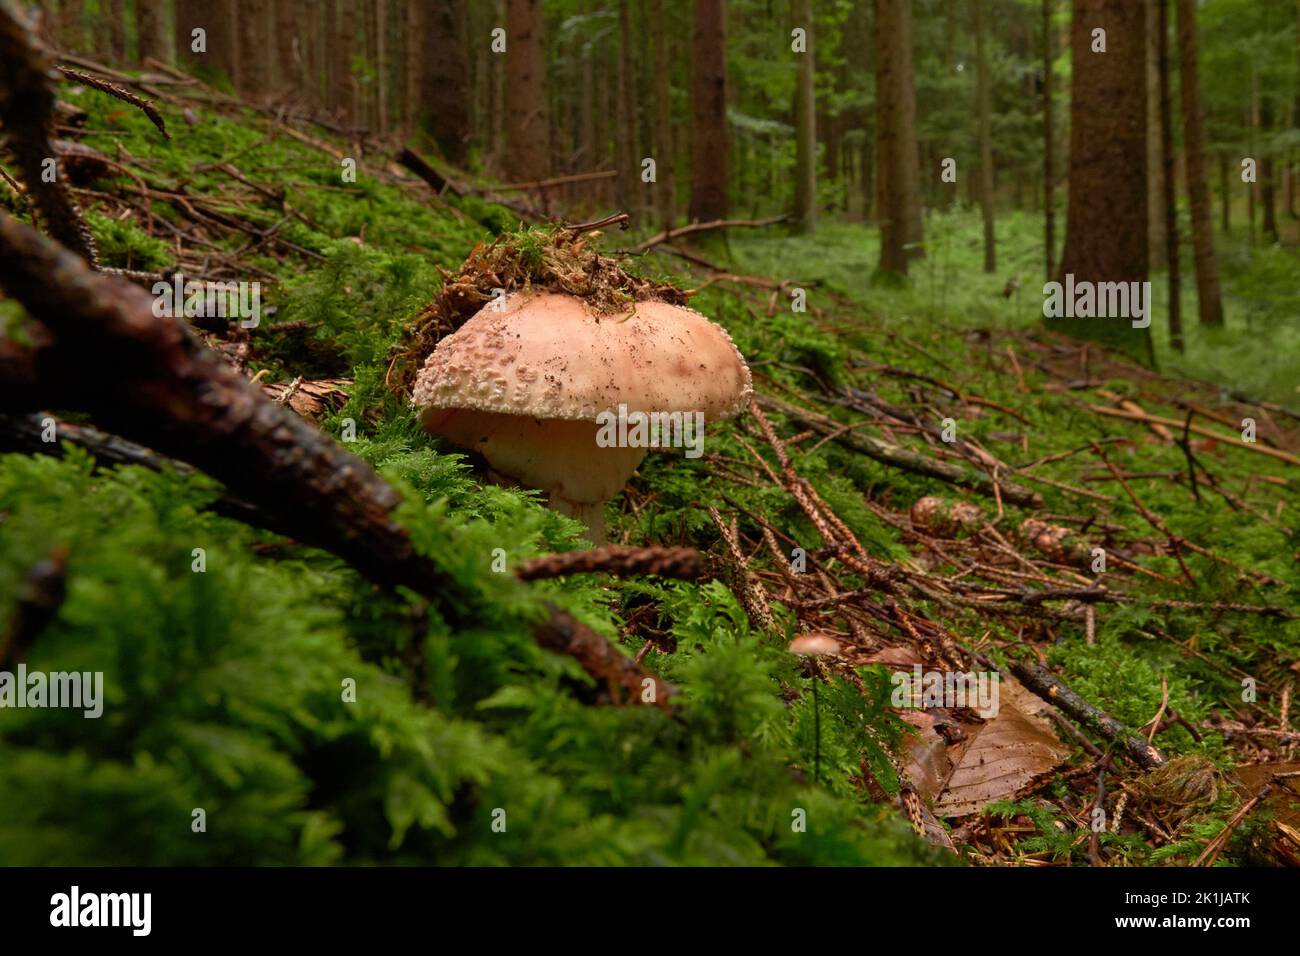 Blusher mushroom (Amanita) on the forest floor Stock Photo